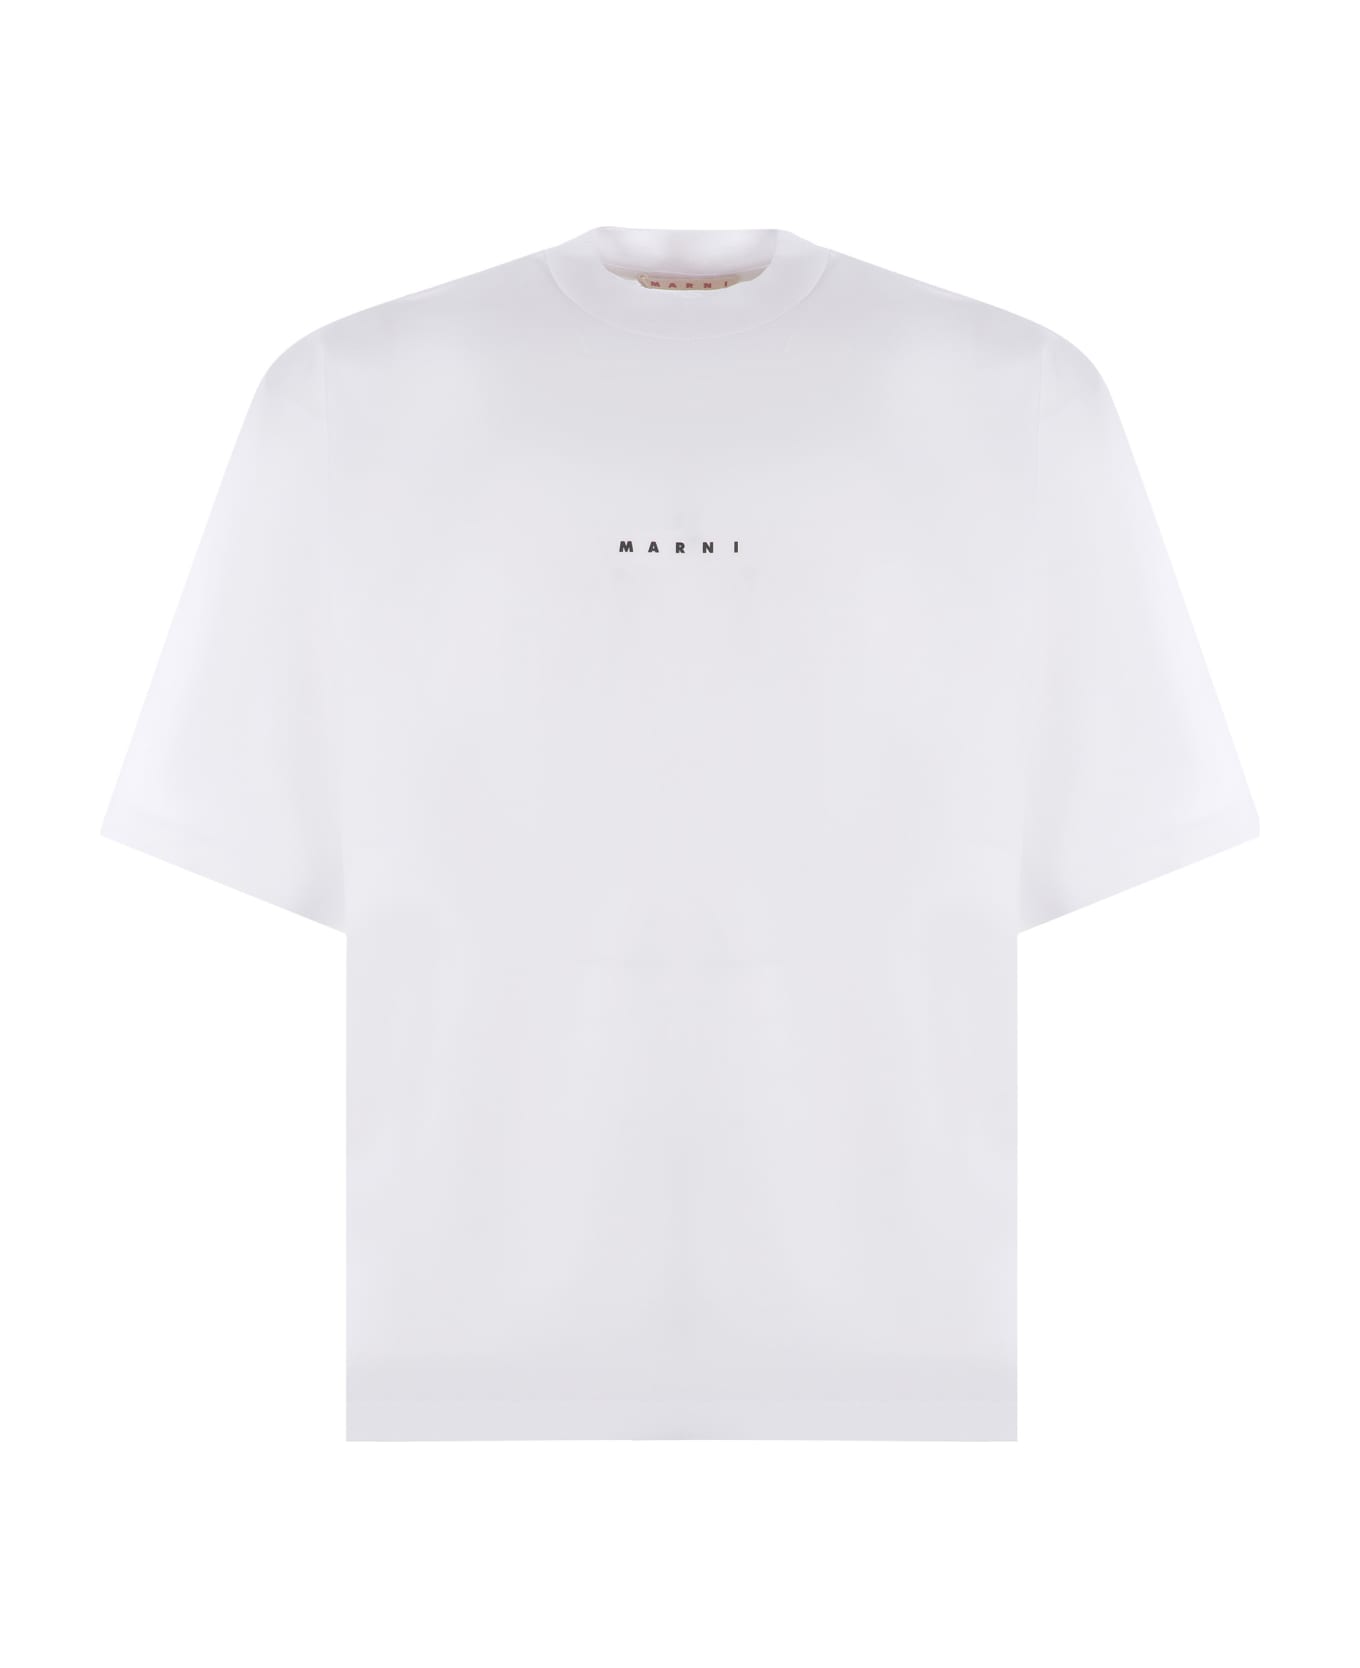 Marni T-shirt Marni Made Of Cotton - Bianco シャツ